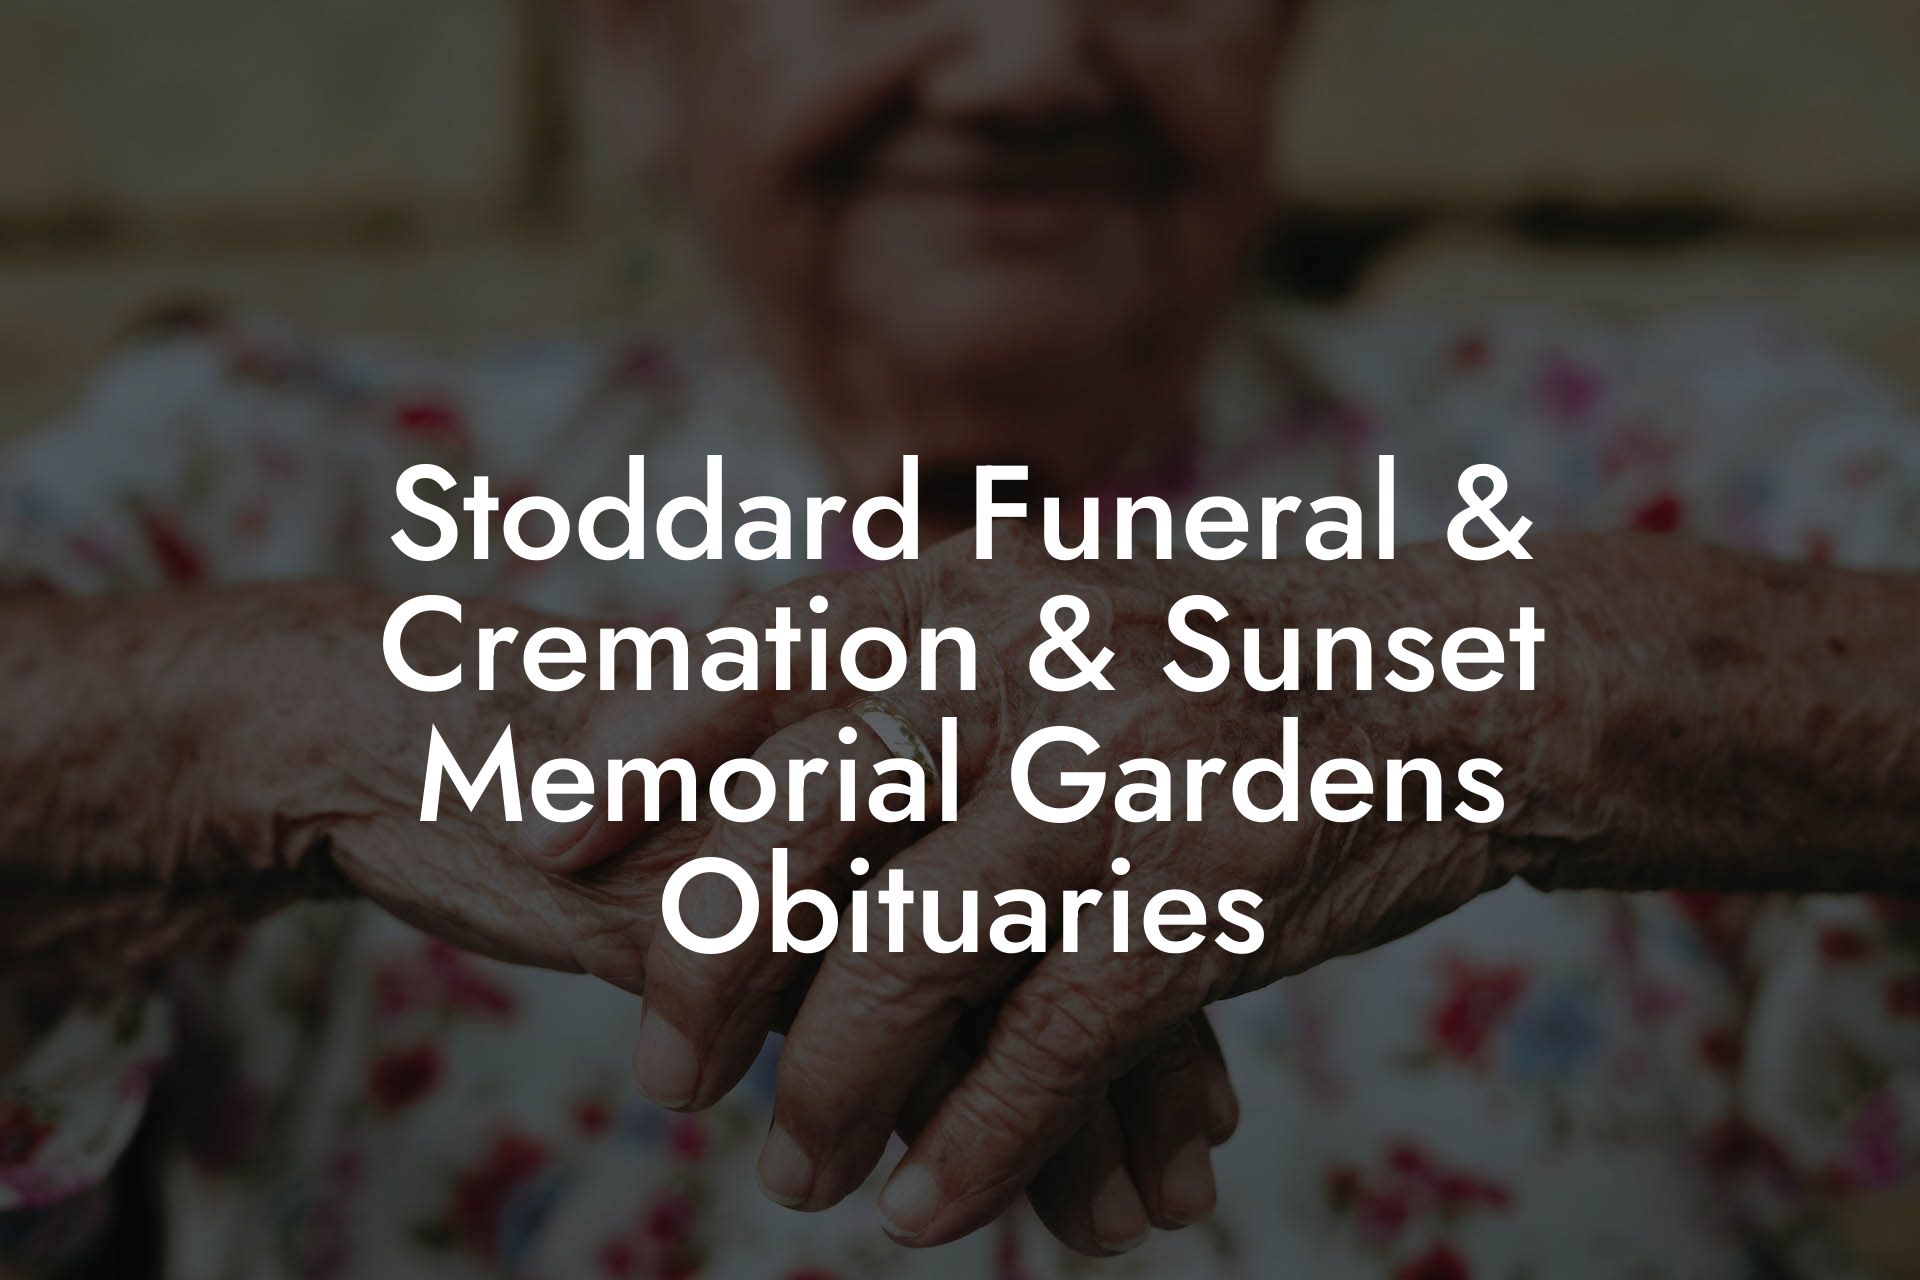 Stoddard Funeral & Cremation & Sunset Memorial Gardens Obituaries